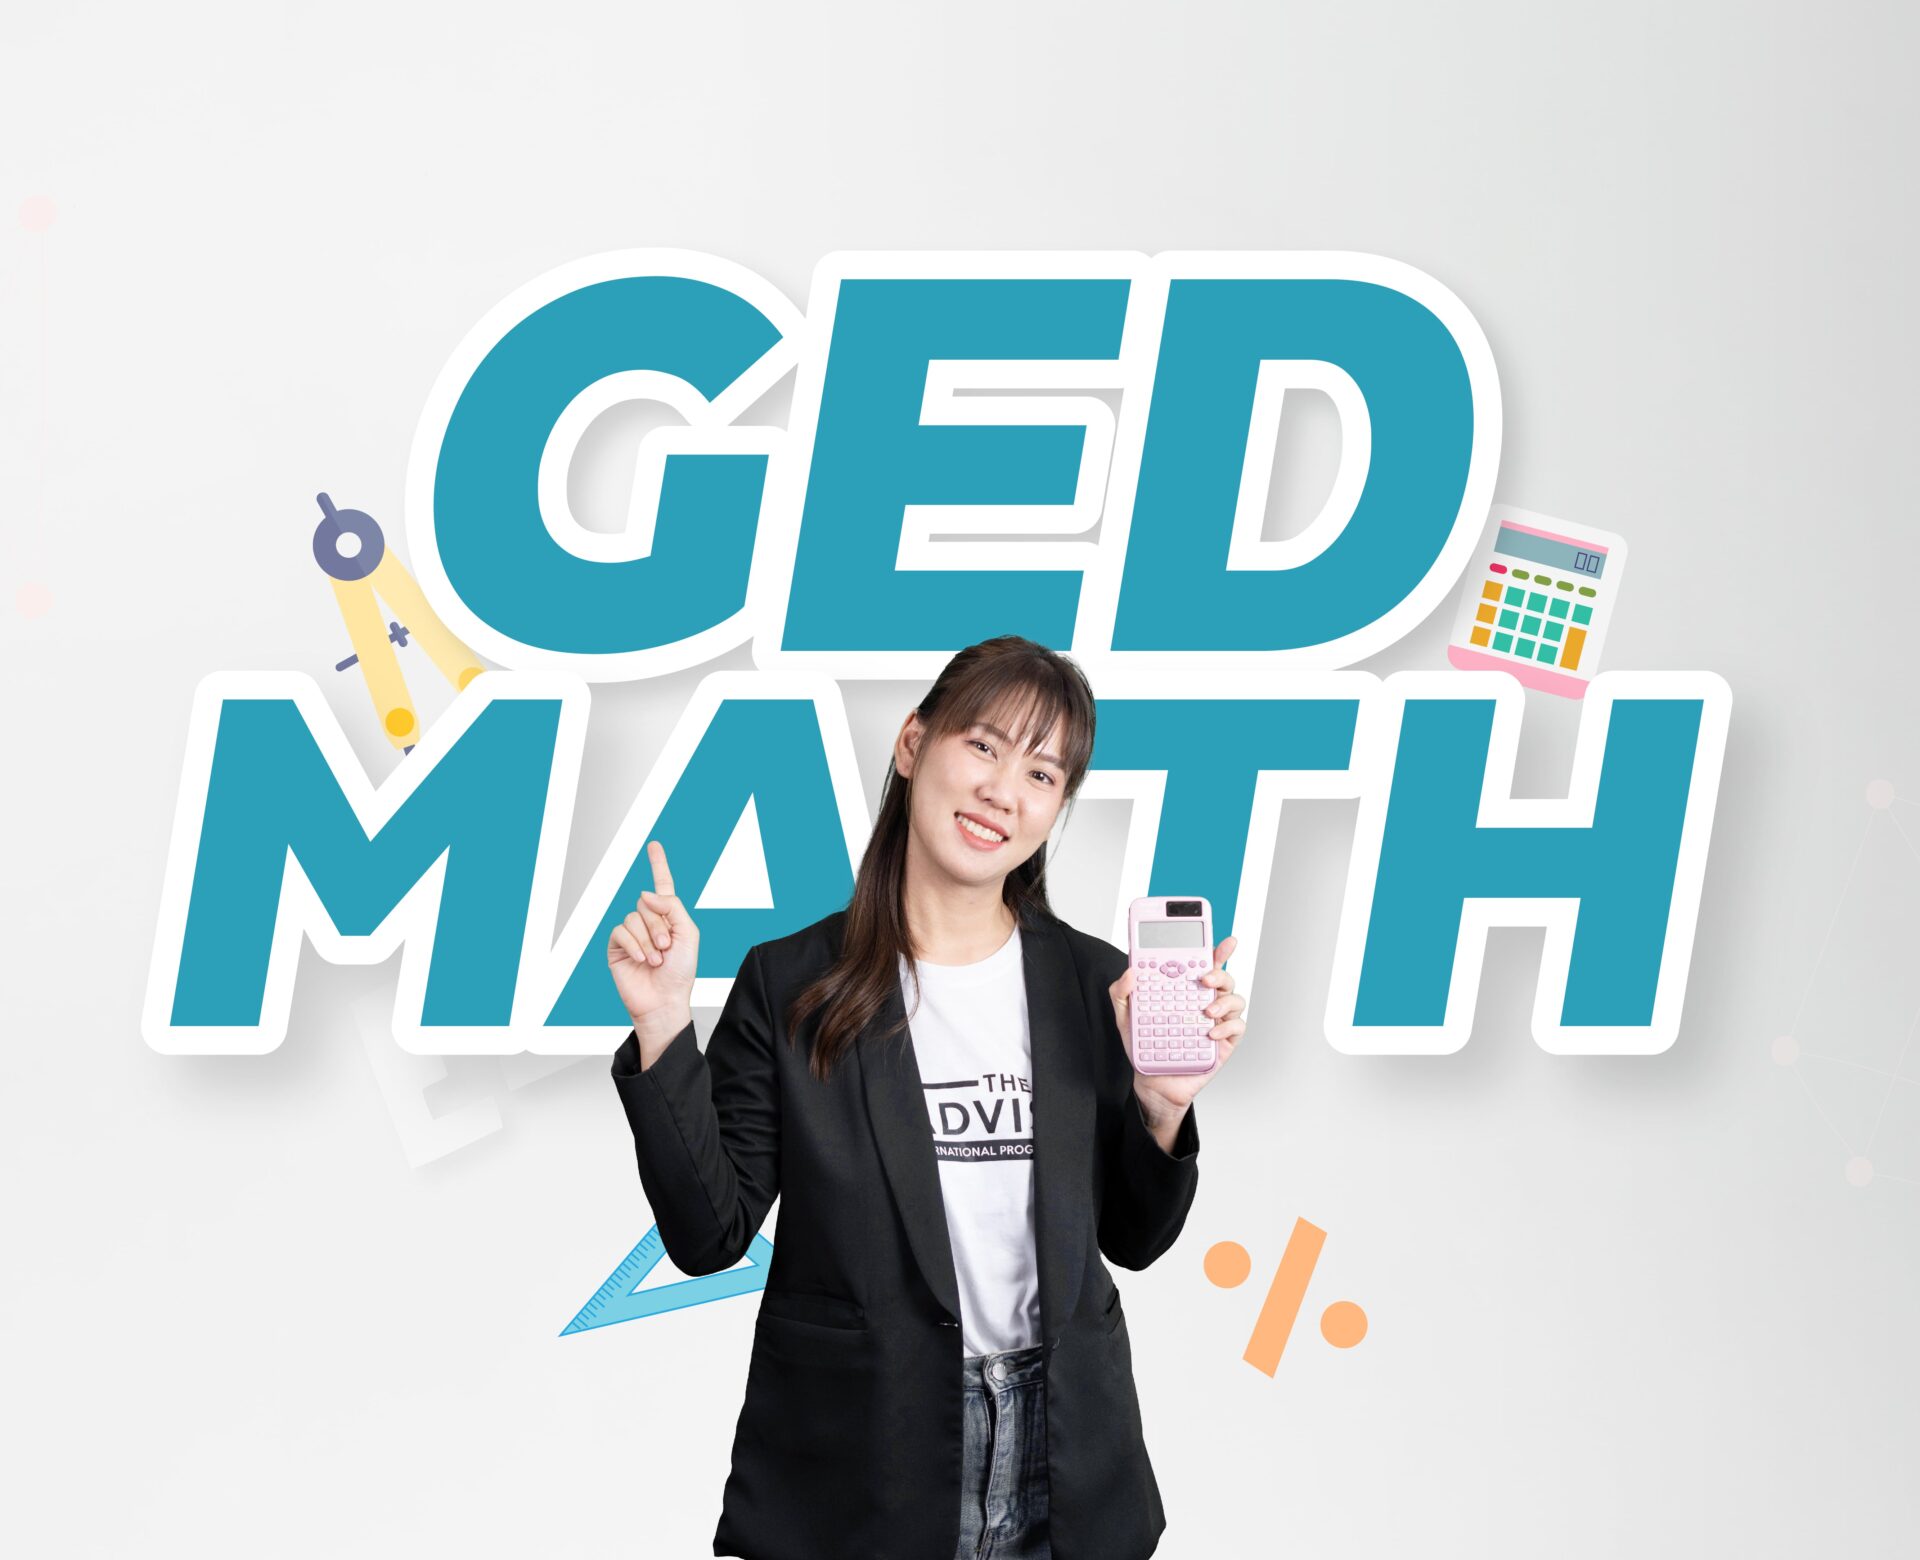 GED Math